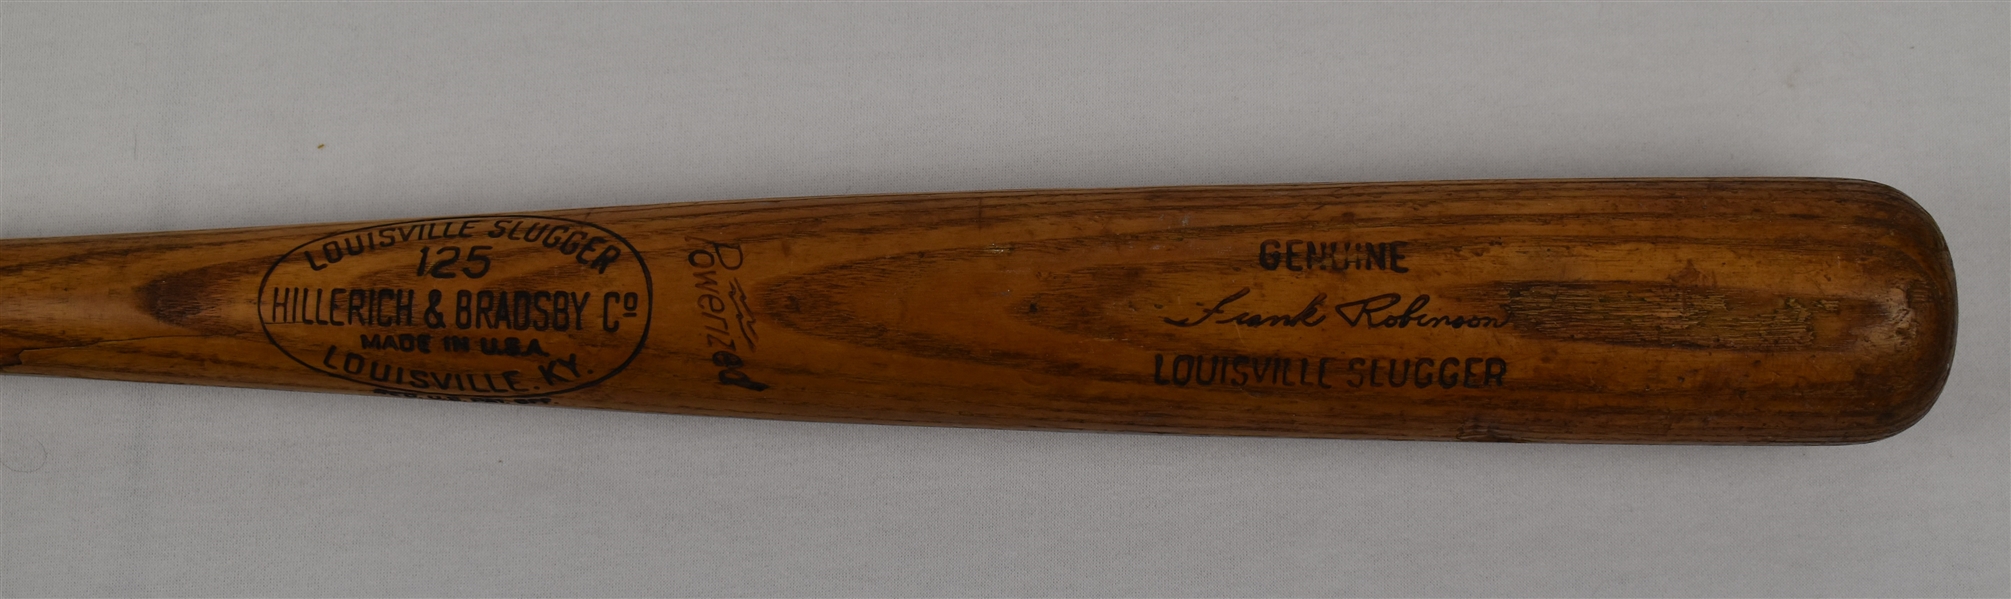 Frank Robinson 1964 Cincinnati Reds Game Used Bat PSA/DNA LOA